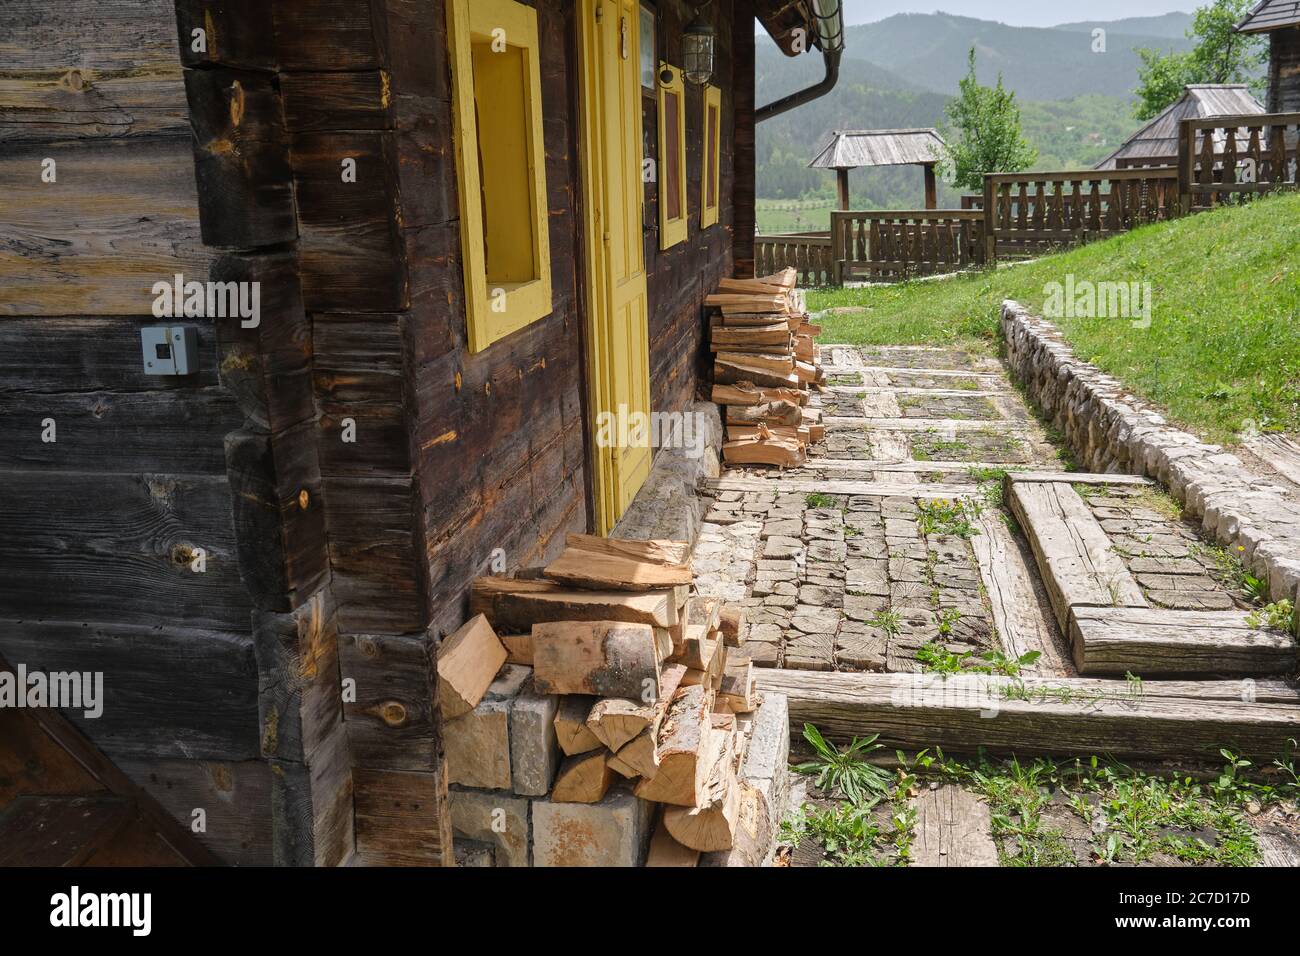 Houses in Drvengrad Ethno Village, Serbia Stock Photo